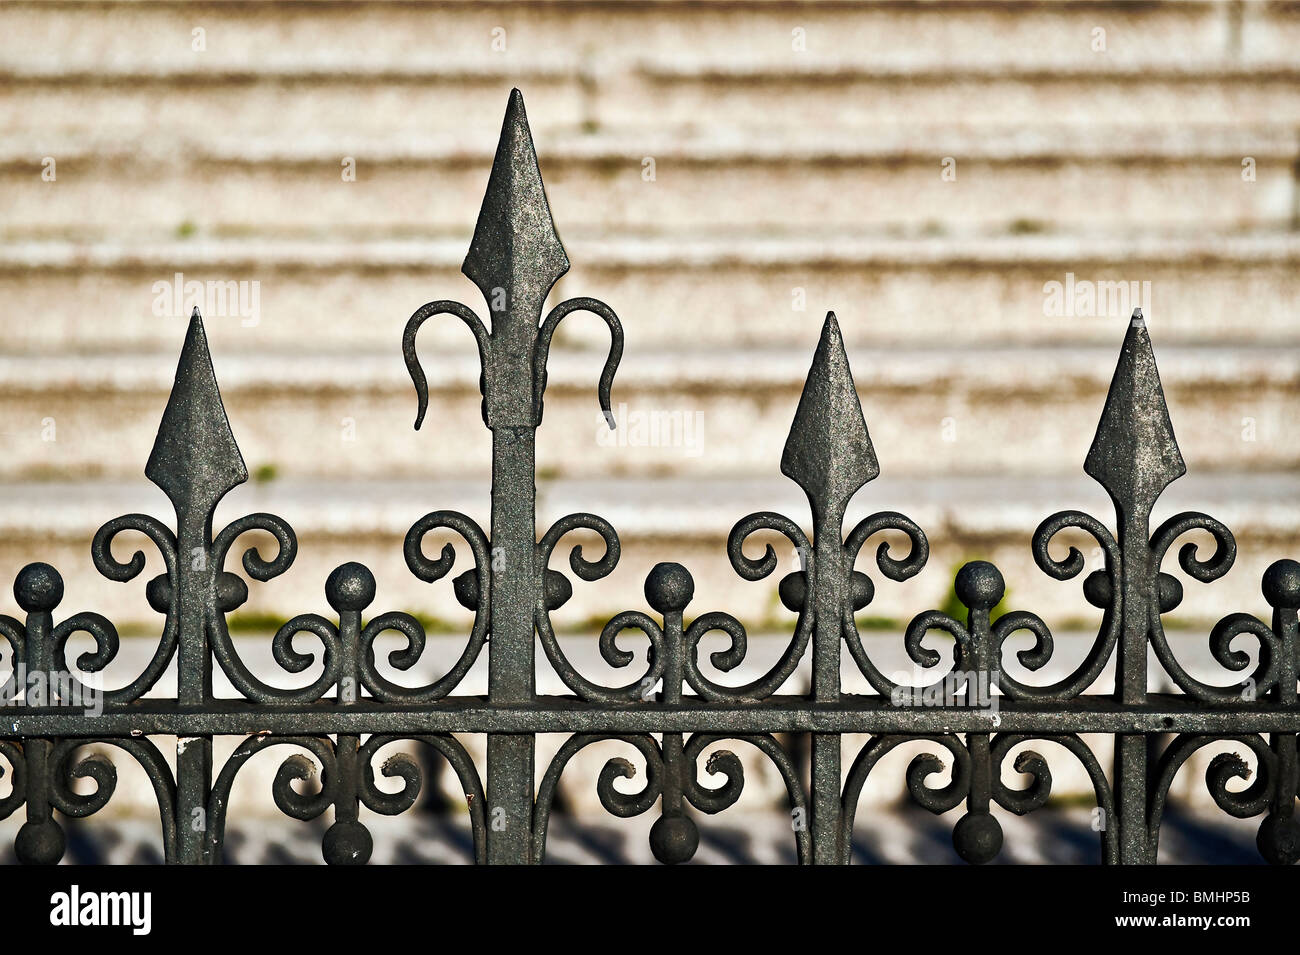 Ornate iron gate detail. Stock Photo